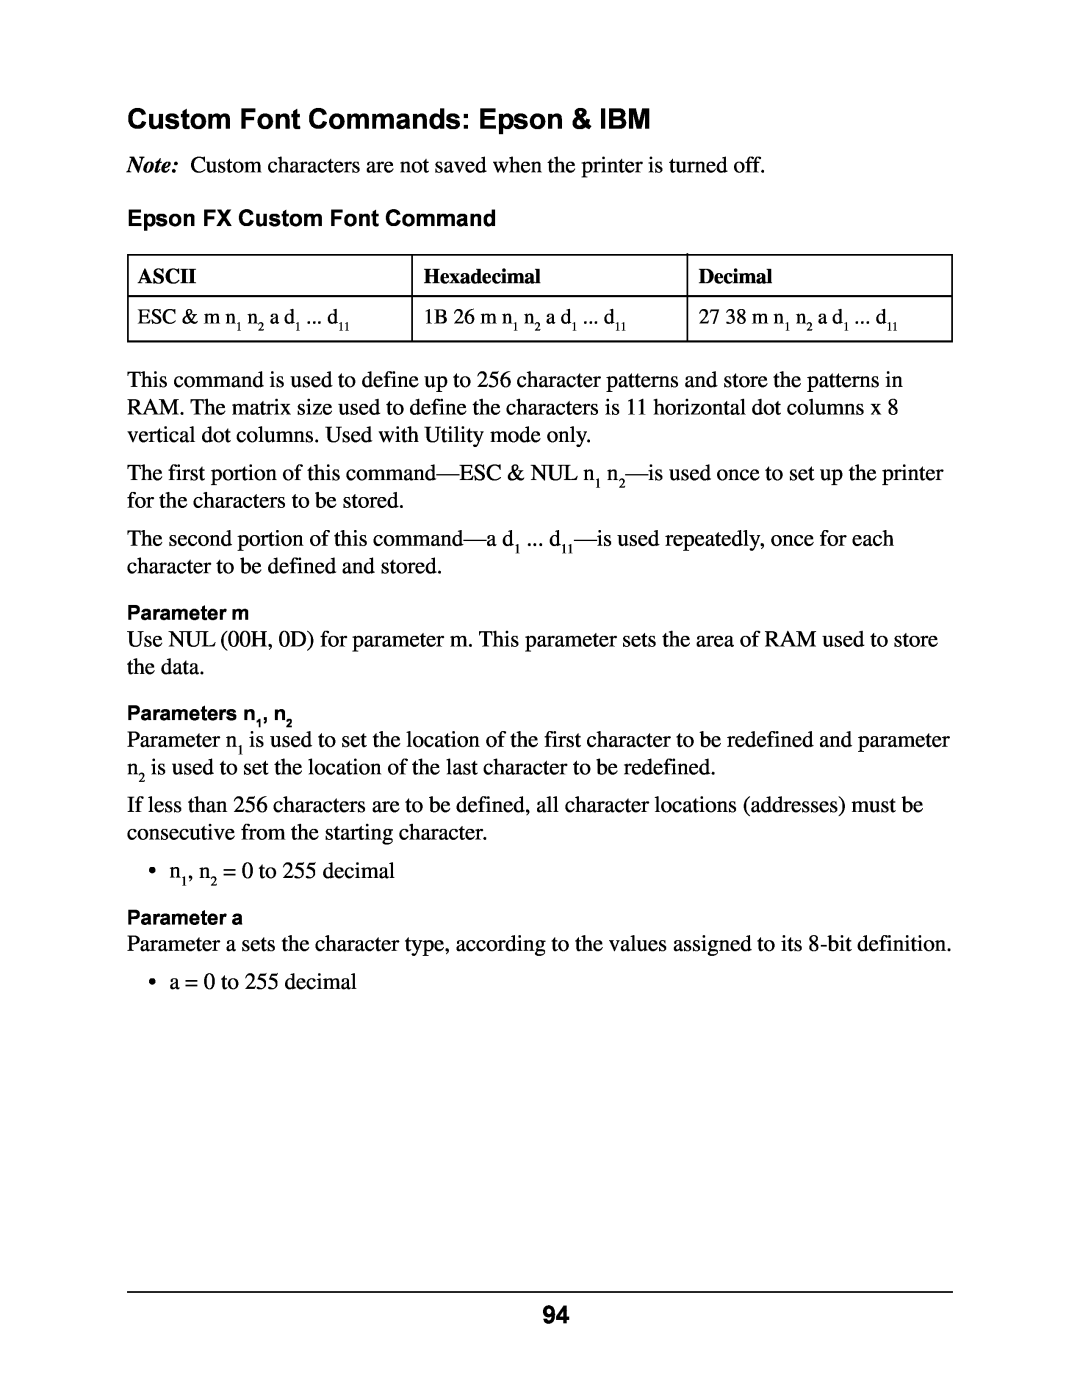 Oki 4410 manual Custom Font Commands Epson & IBM, Epson FX Custom Font Command 